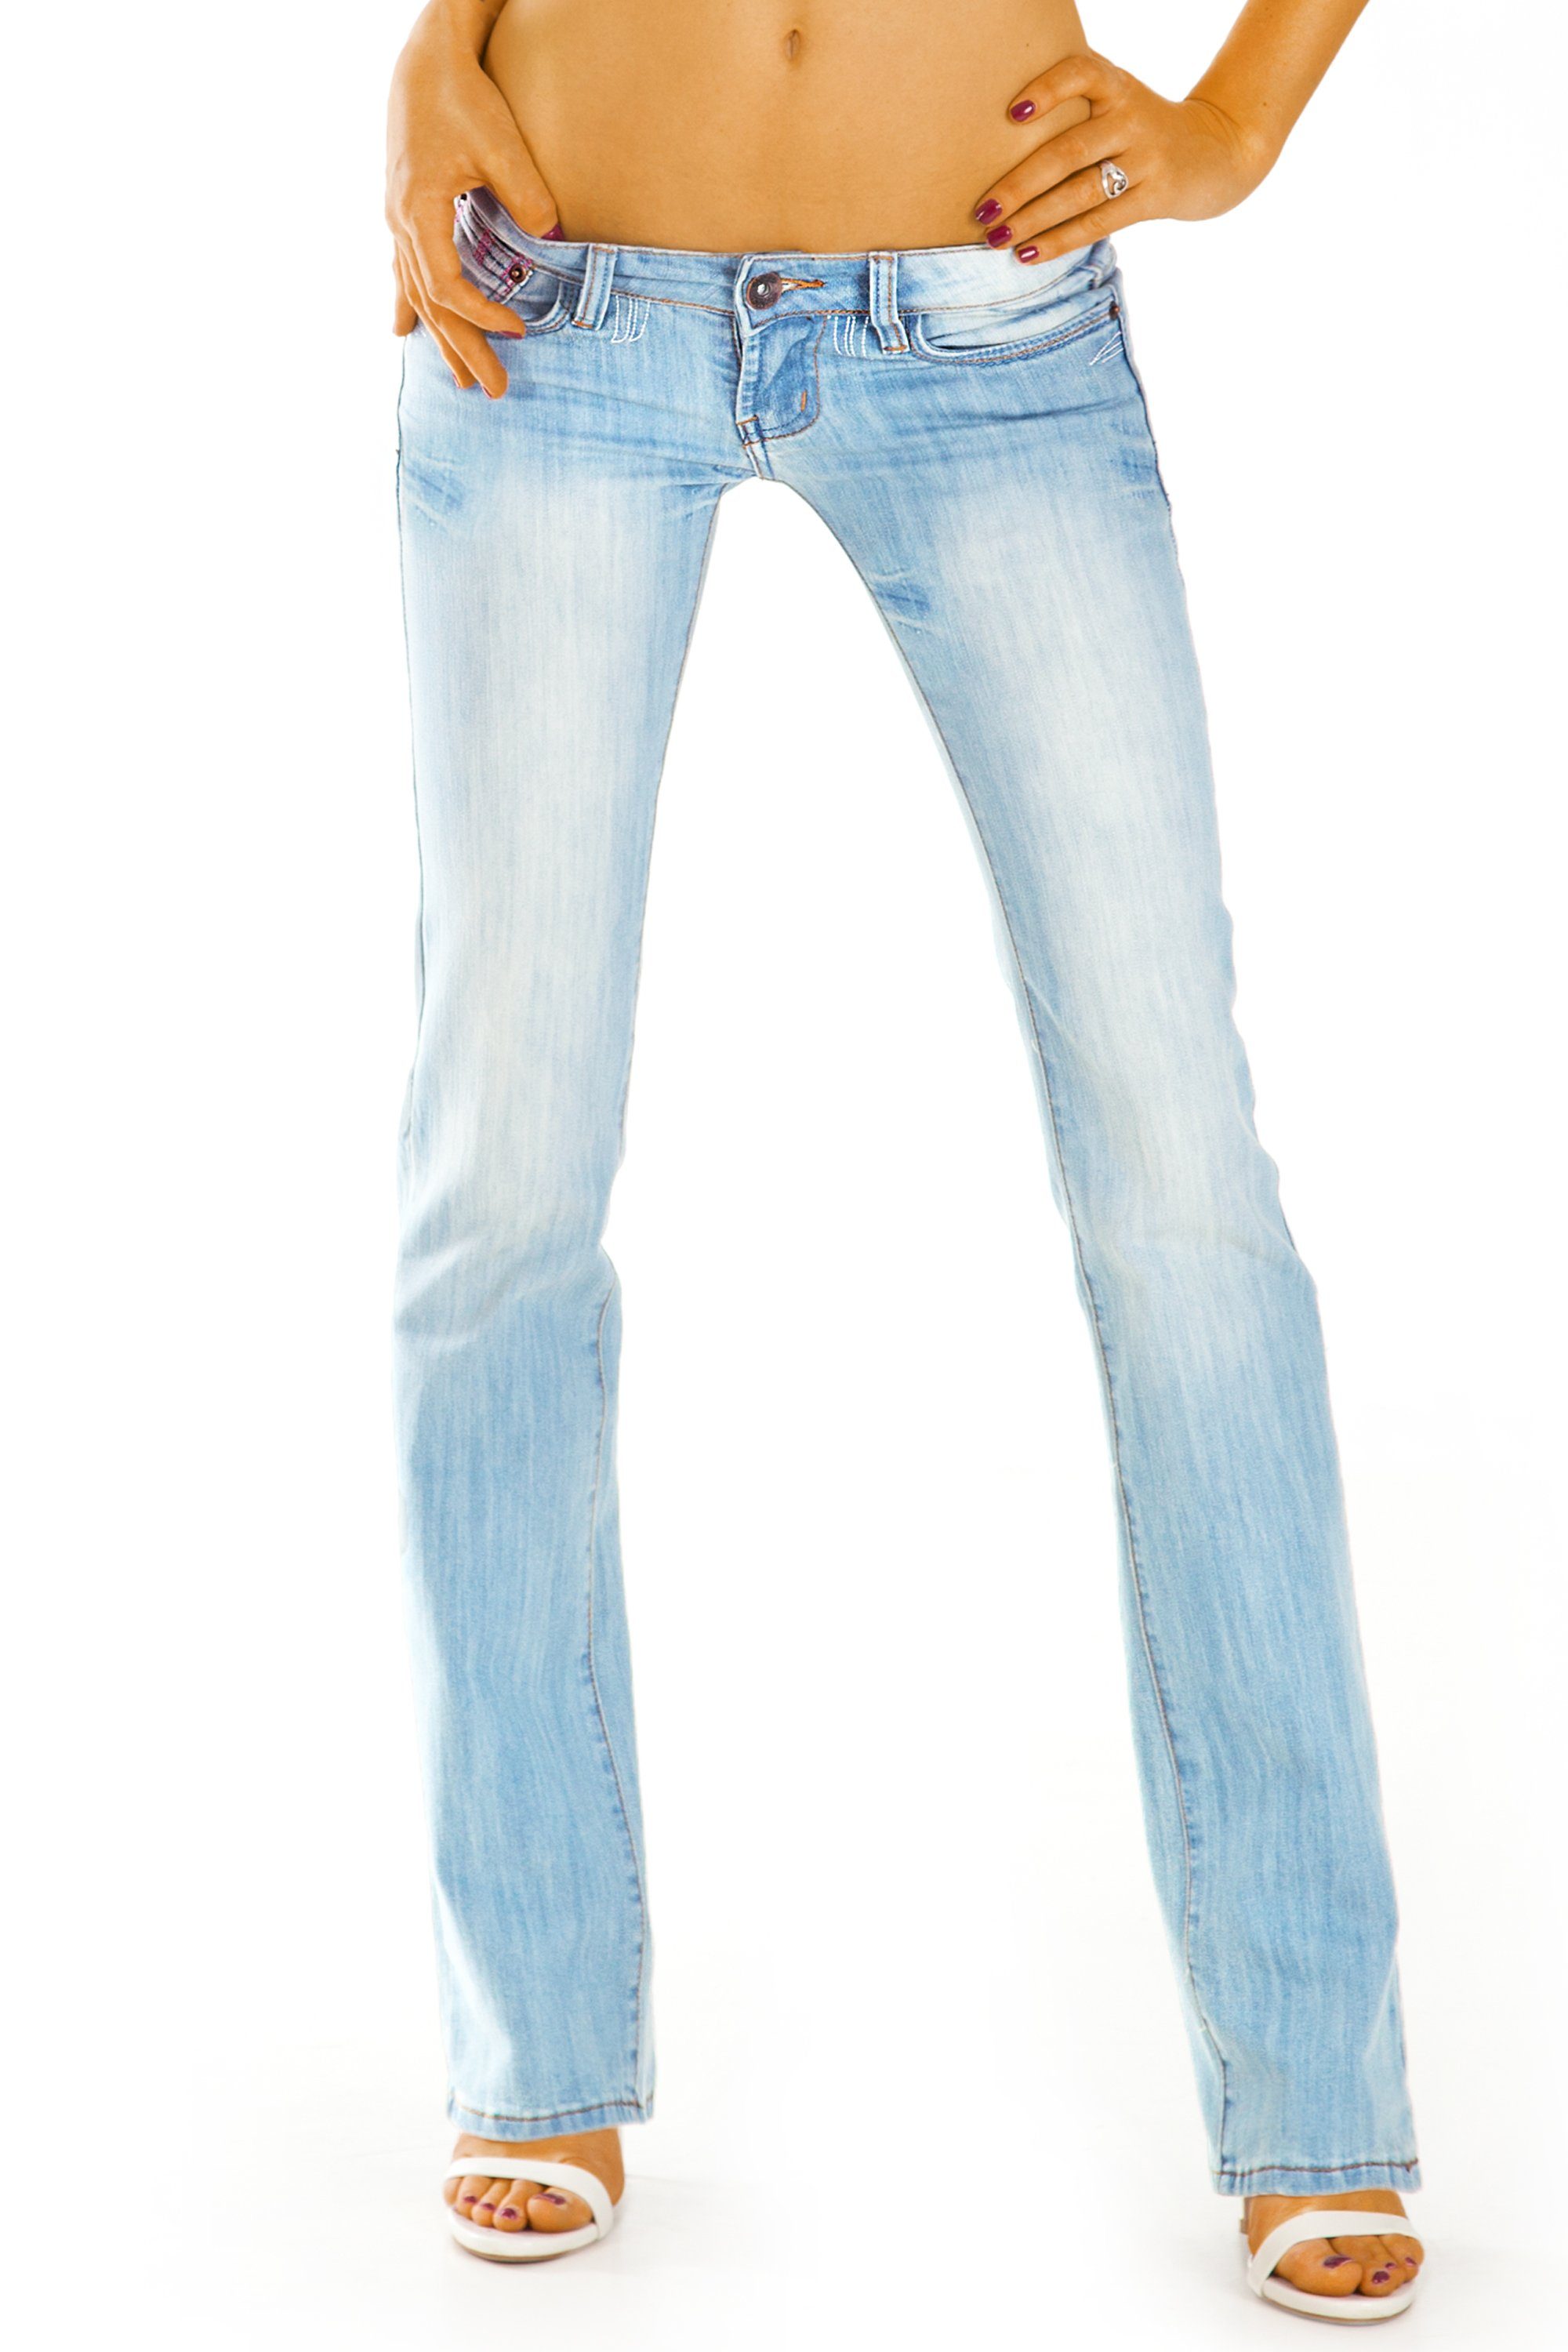 Bootcut styled Bootcut-Jeans Jeanshose niedrige Hüftjeans j37a-1 Damen sehr Leibhöhe, - mit Leibhöhe Stretch-Anteil, 5-pOcket-Style - extrem tiefer be